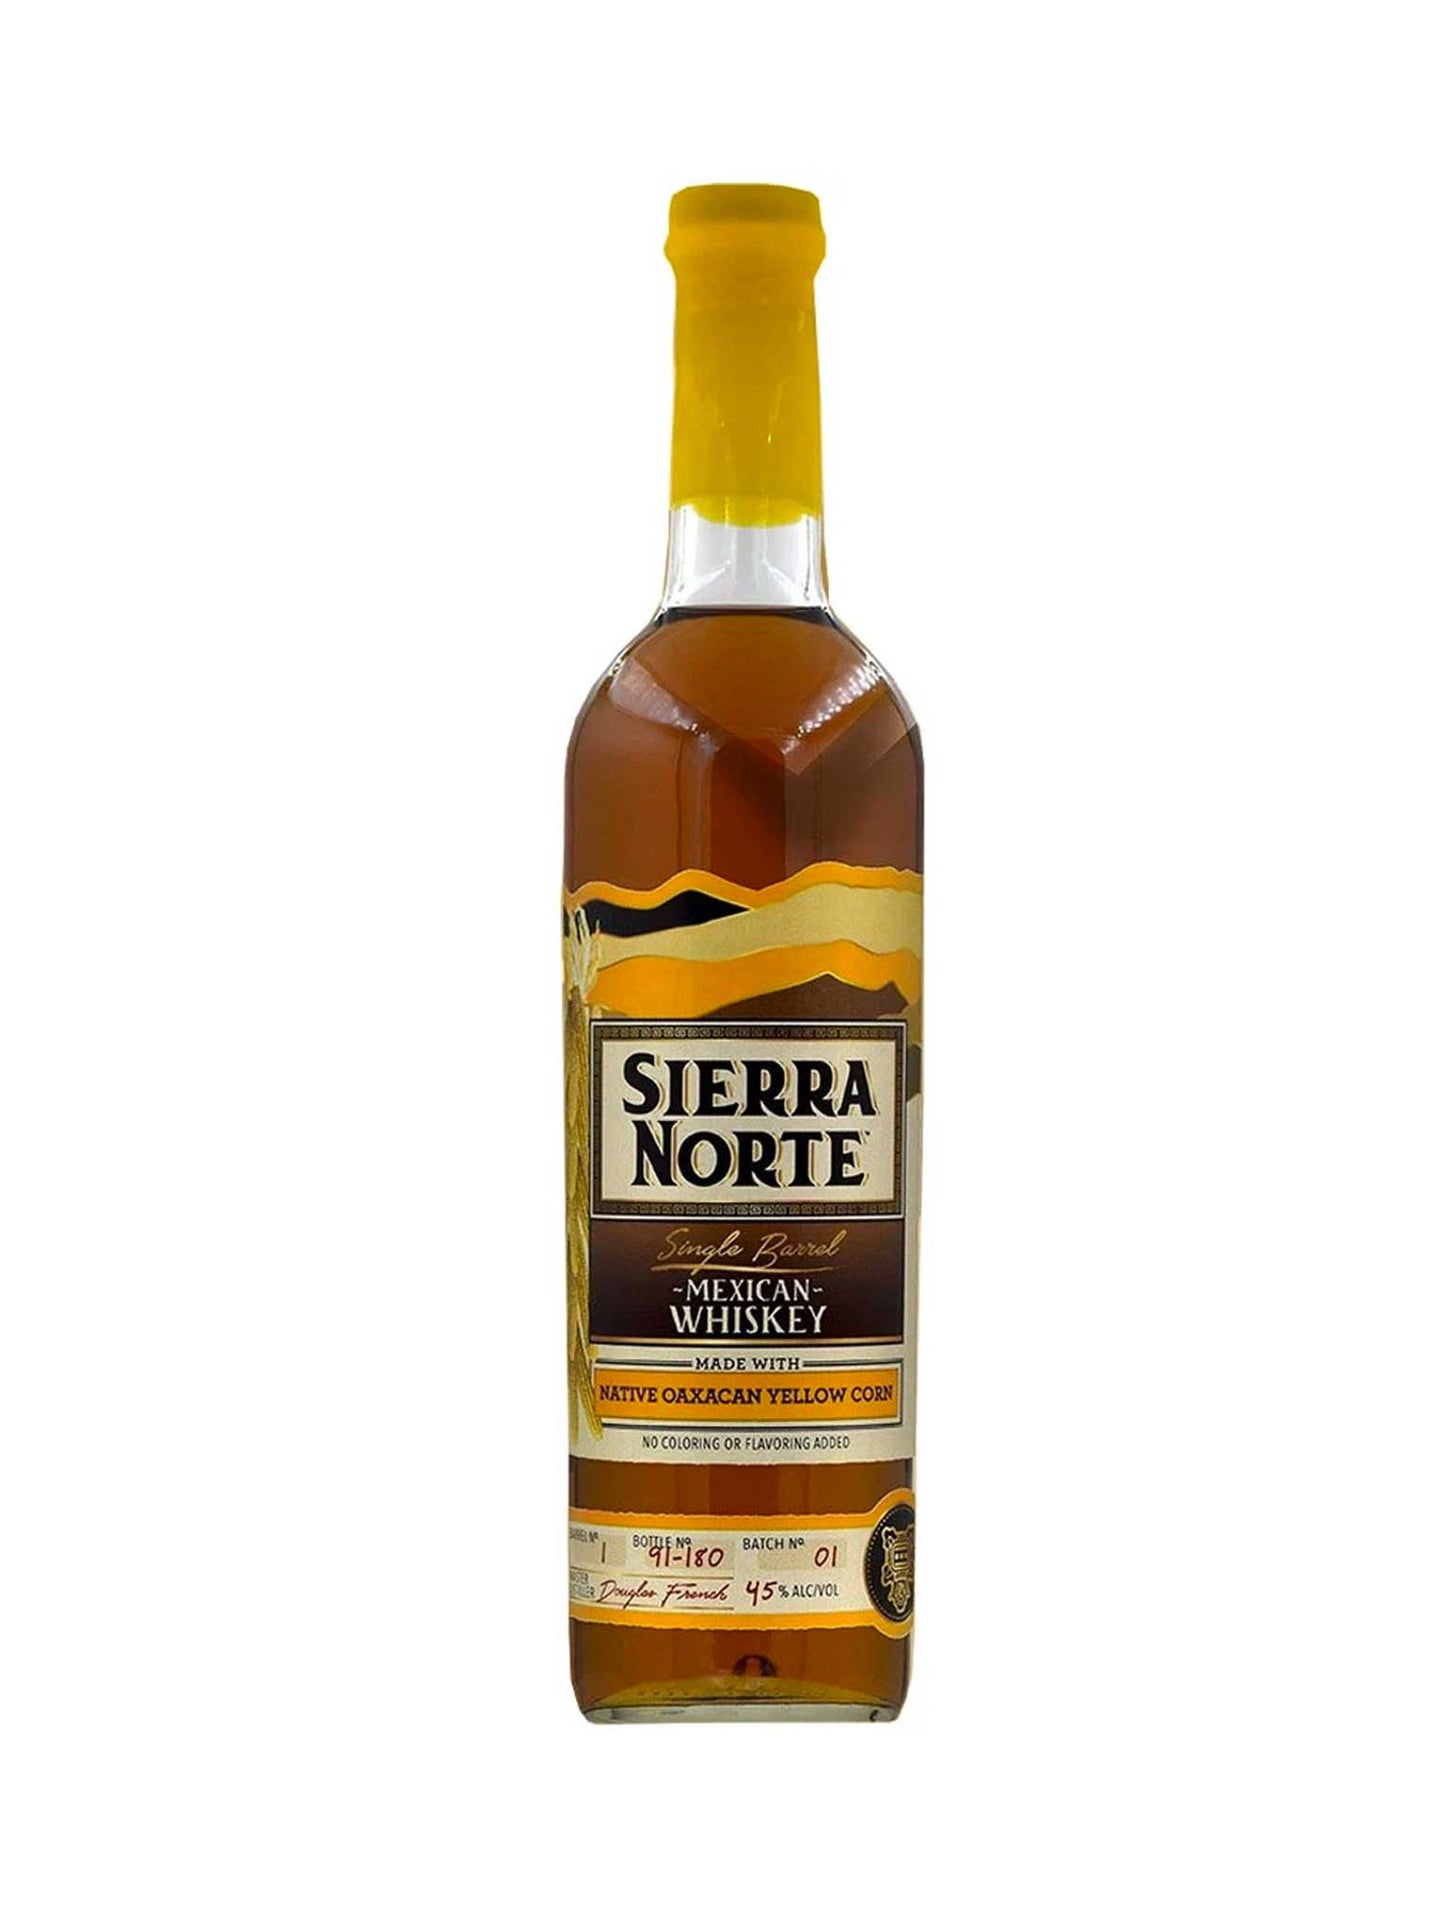 Sierra Norte Single Barrel Mexican Whiskey (Yellow Label) 750mL